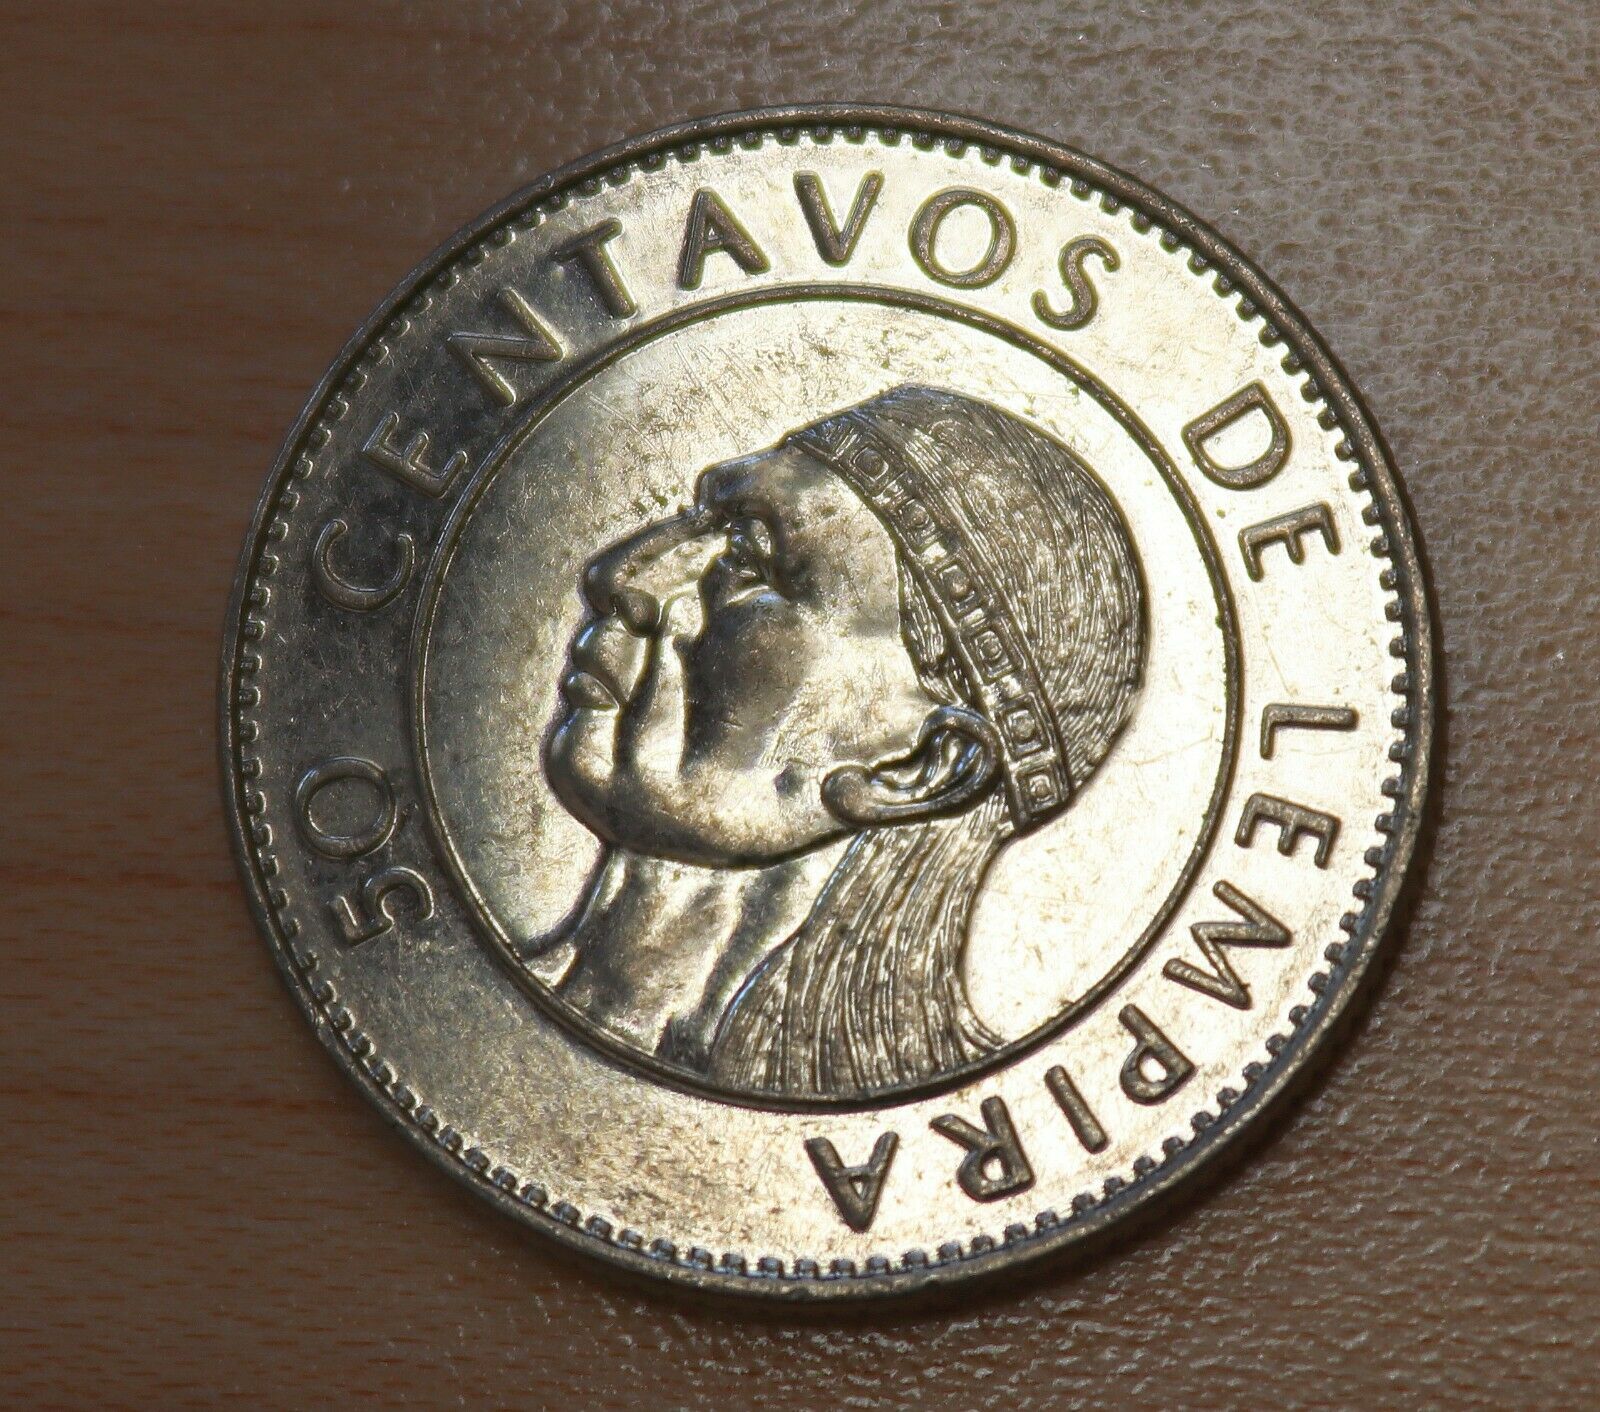 1994 Honduras 50 Centavos